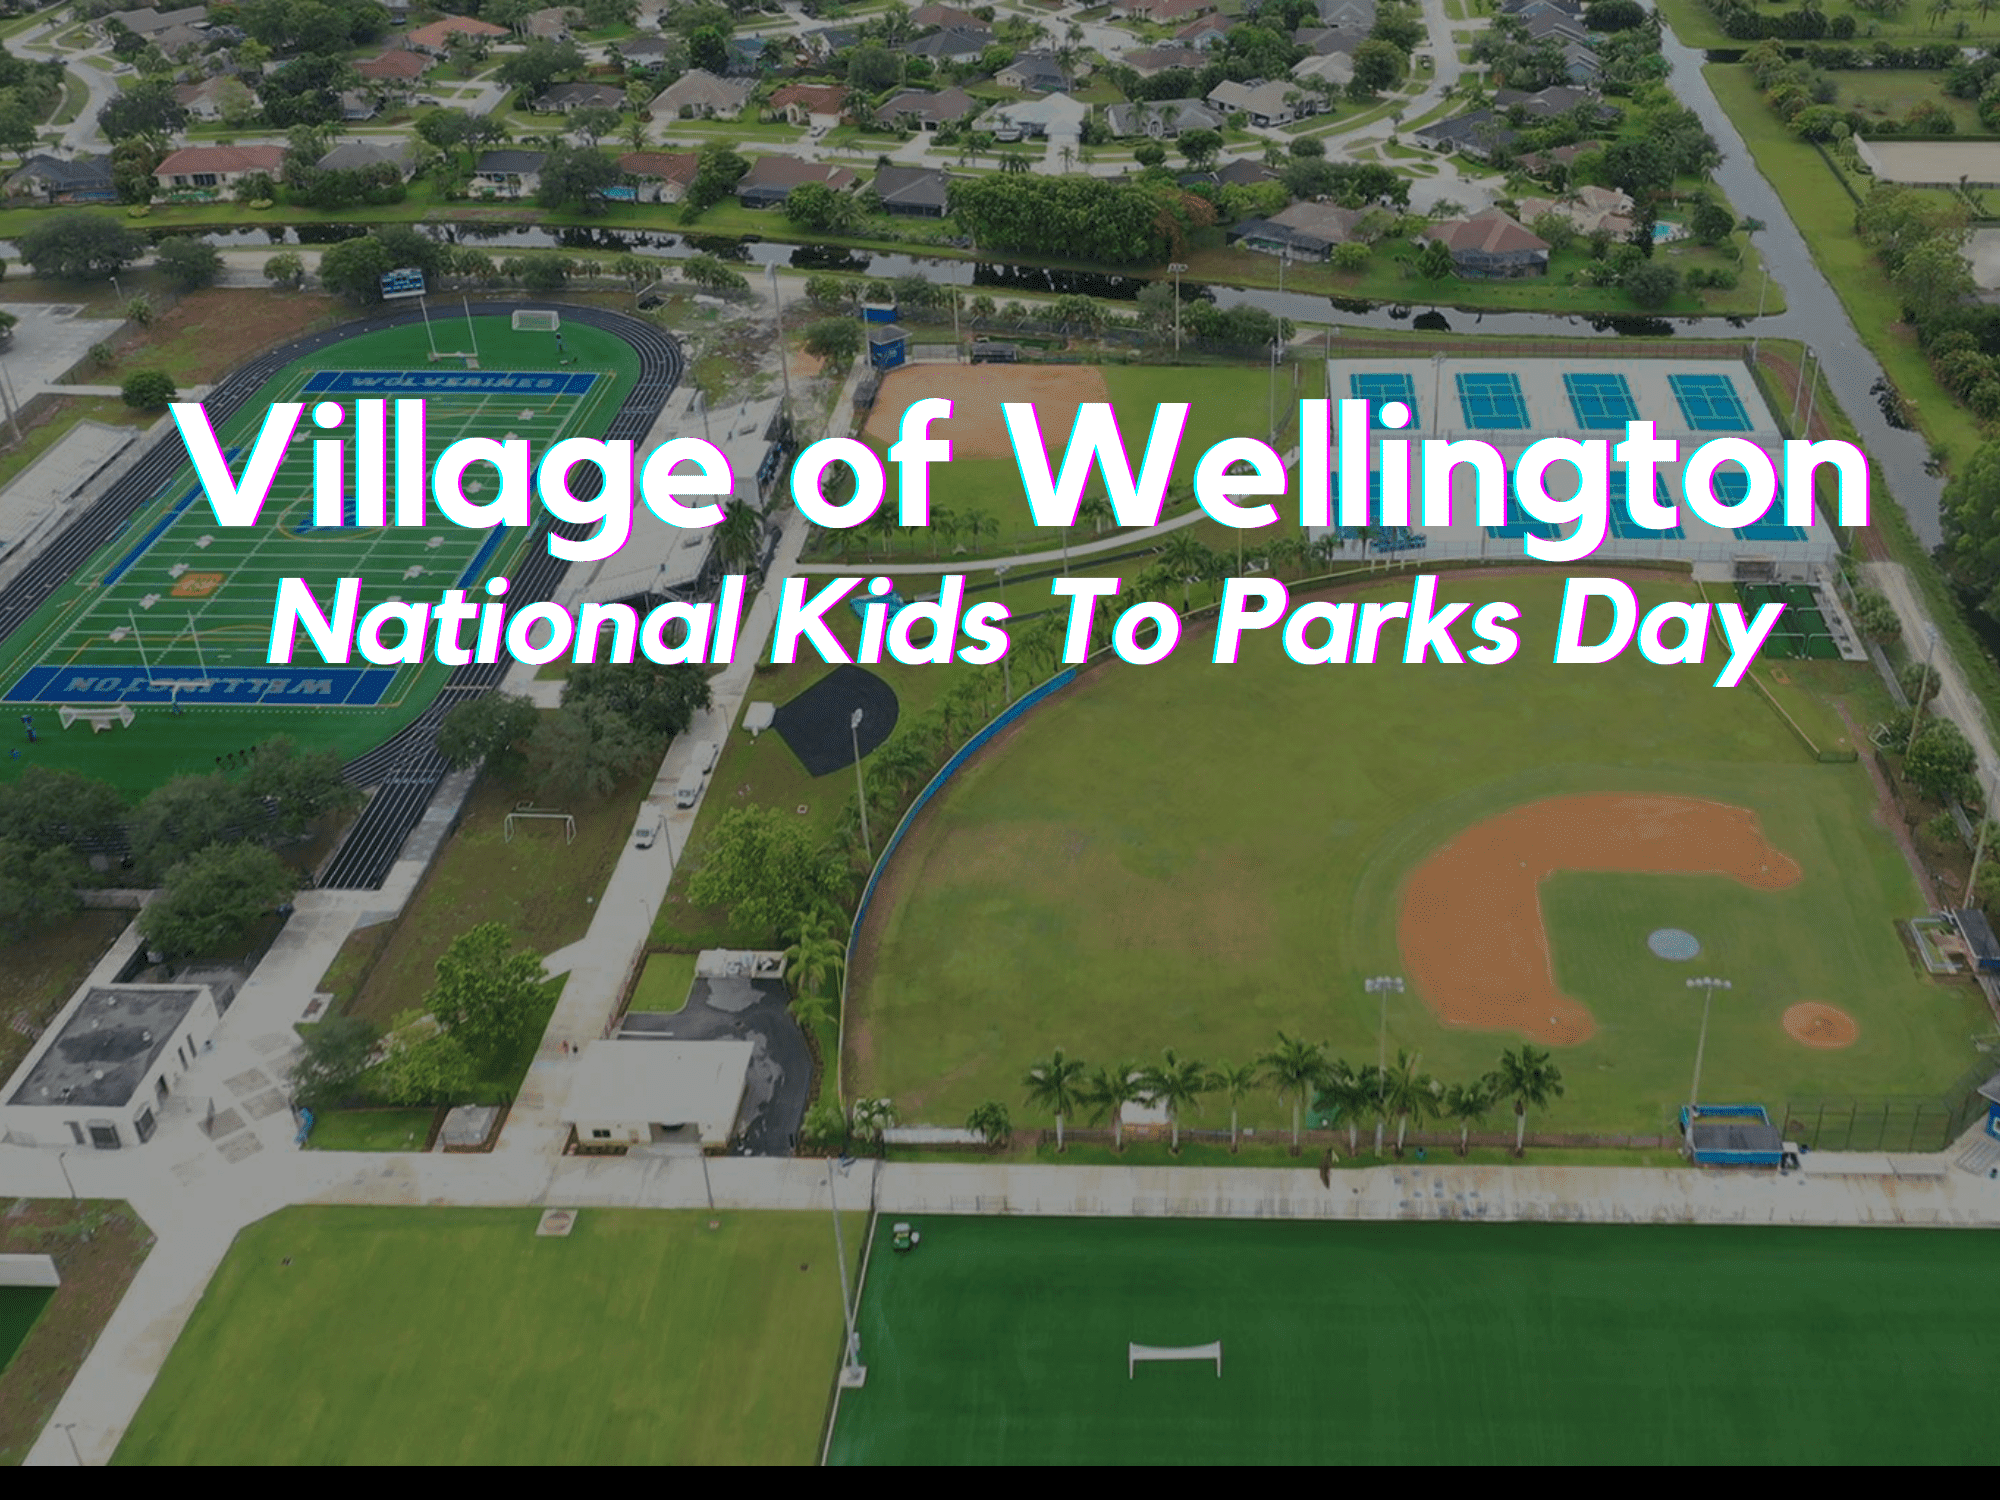 Village of Wellington - Kids To Parks Day